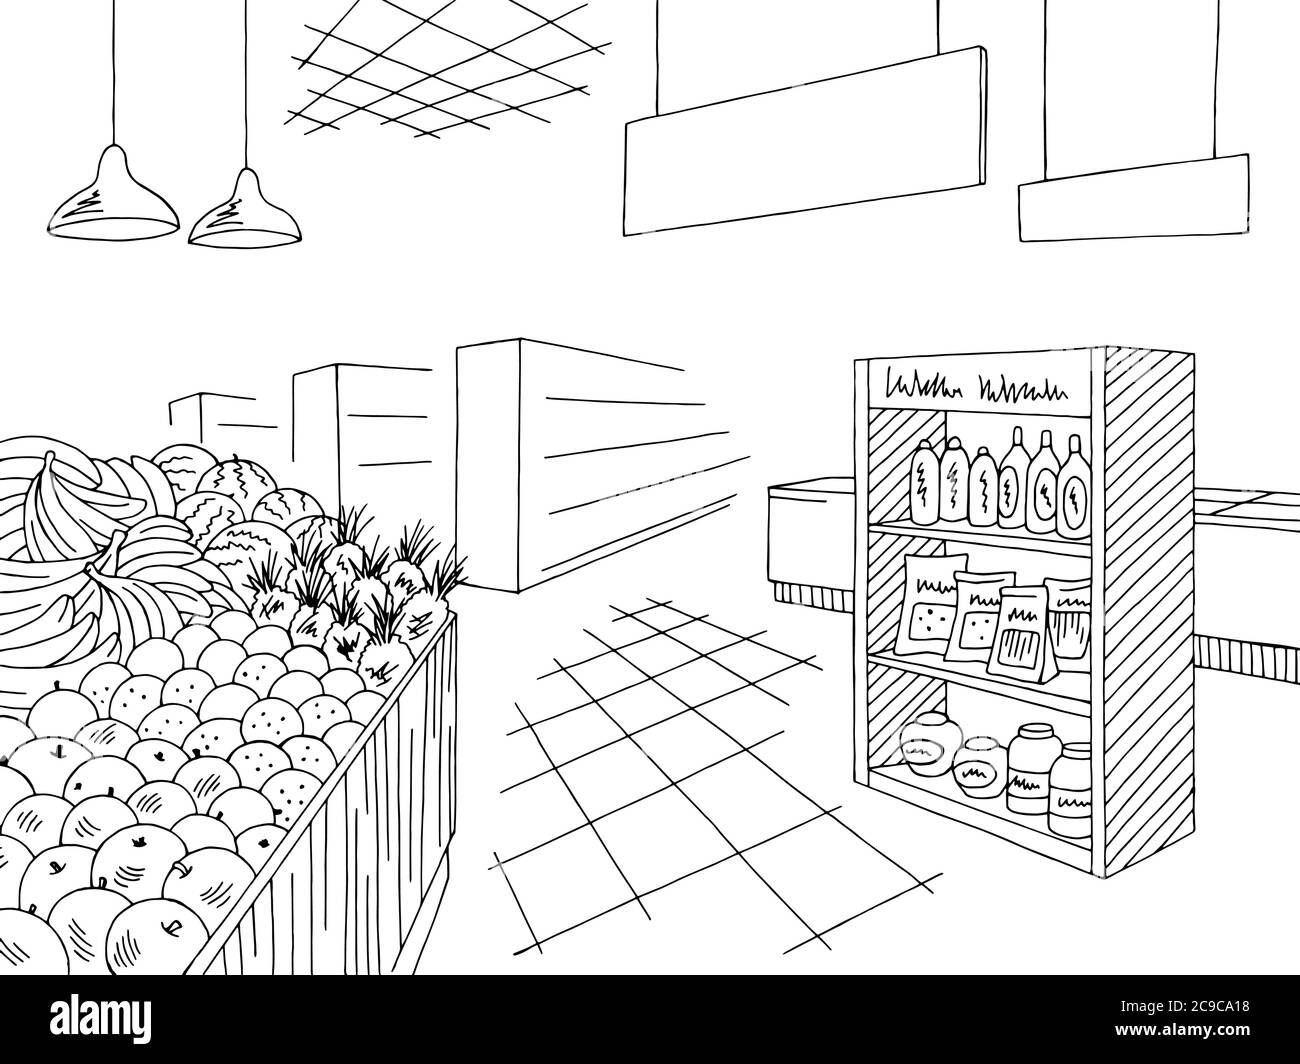 Lebensmittelgeschäft Innengeschäft Shop schwarz weiß Grafik Skizze Illustration Vektor Stock Vektor